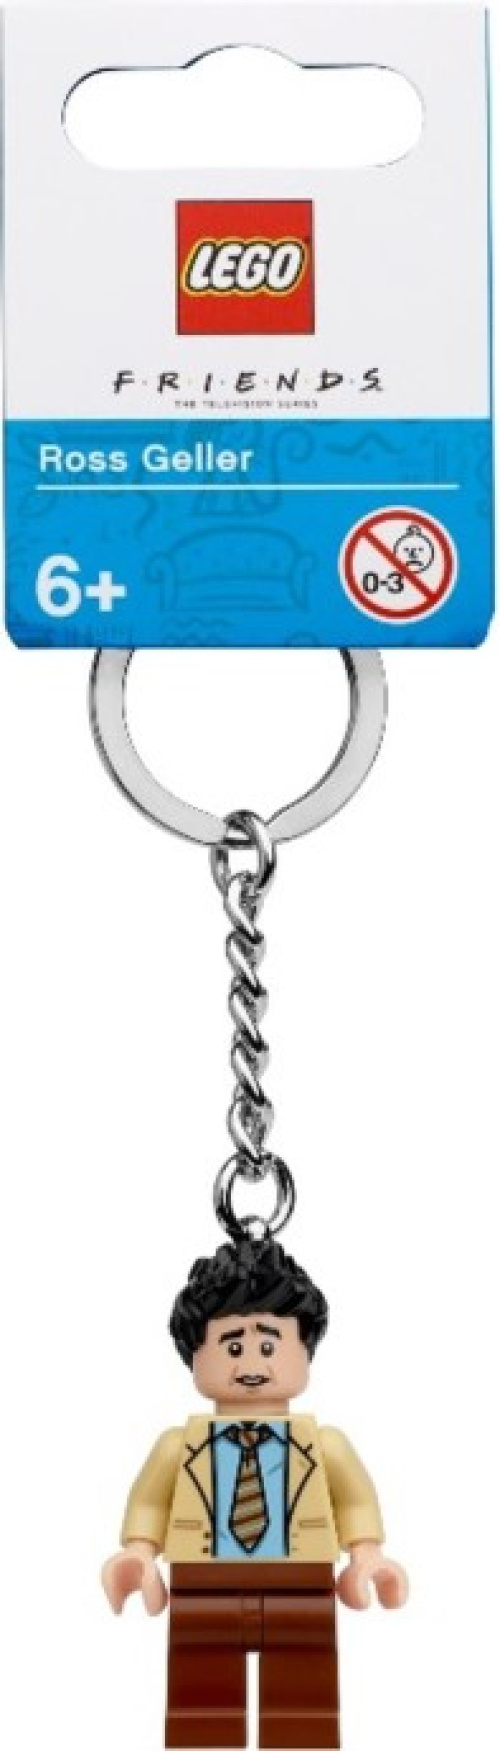 854117-1 Ross Geller Key Chain